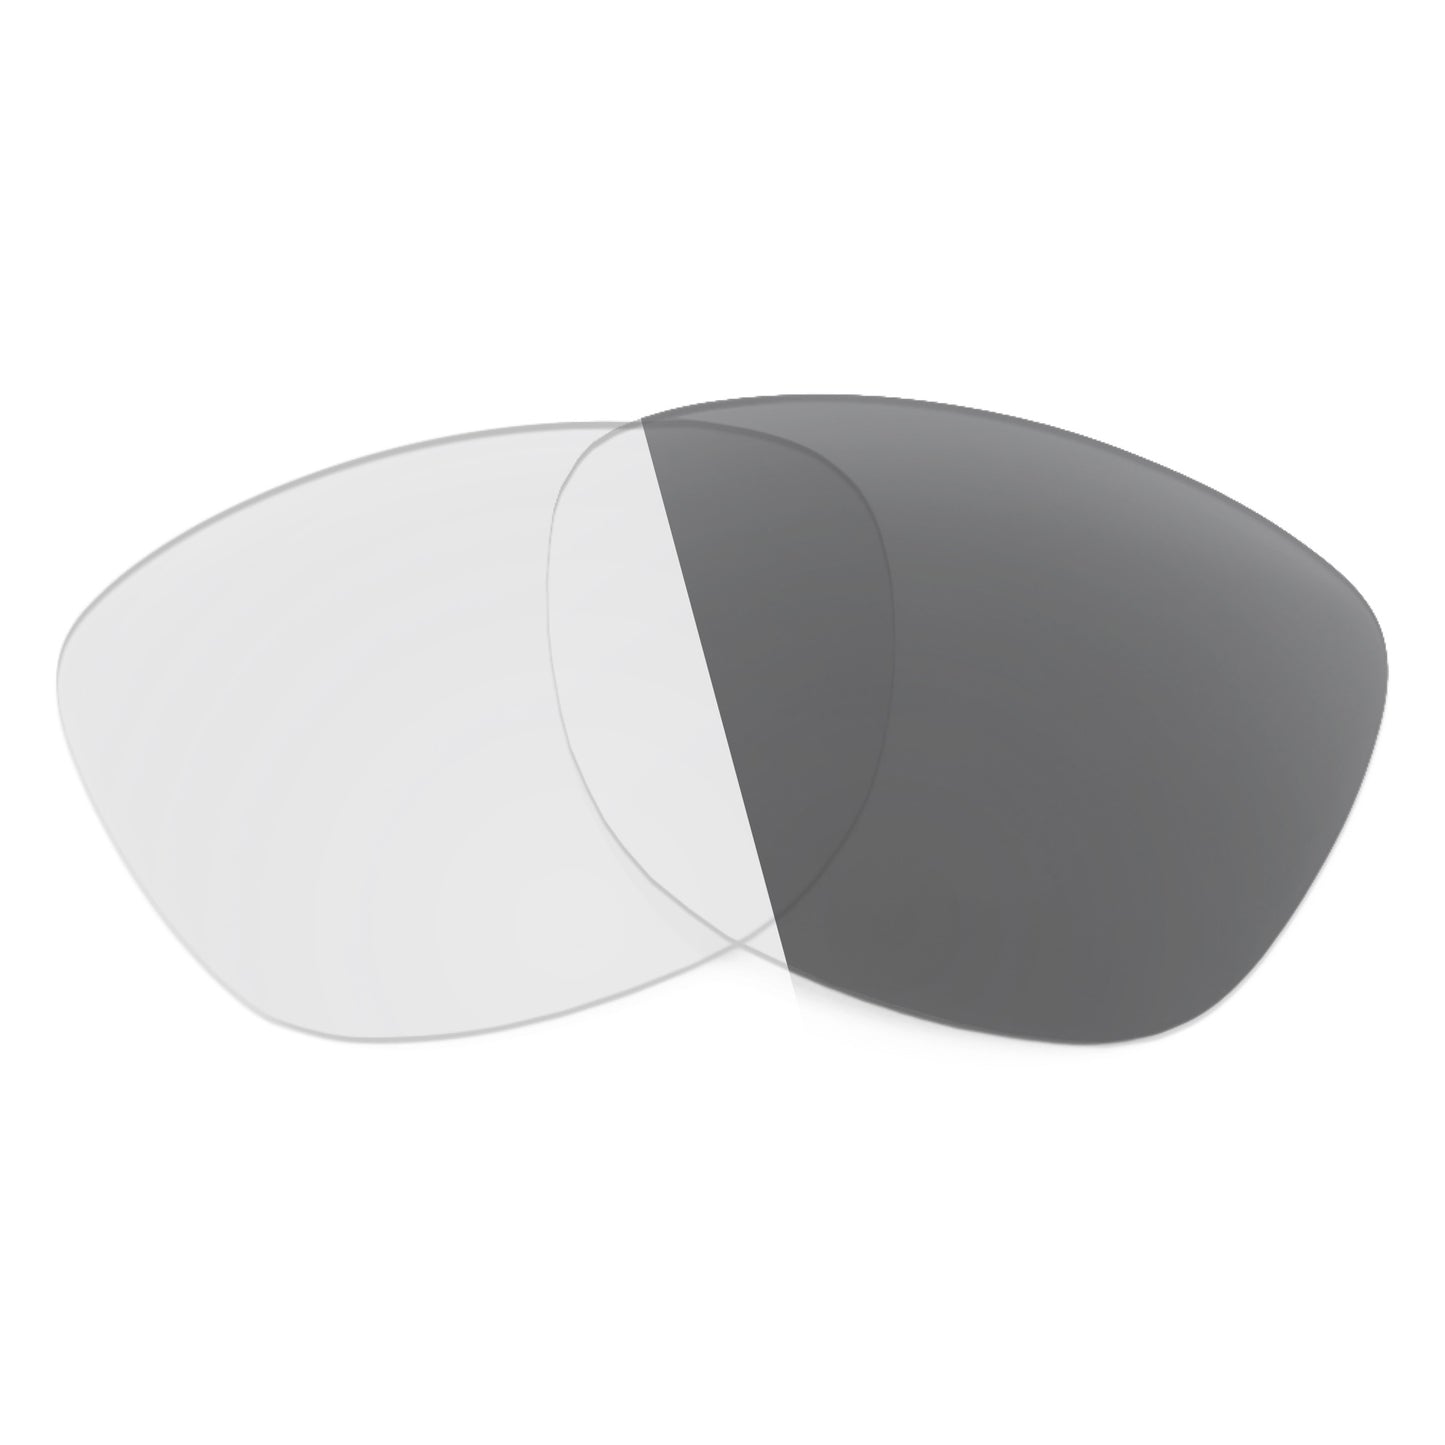 Revant replacement lenses for Ray-Ban Folding Wayfarer RB4105 54mm Non-Polarized Adapt Gray Photochromic